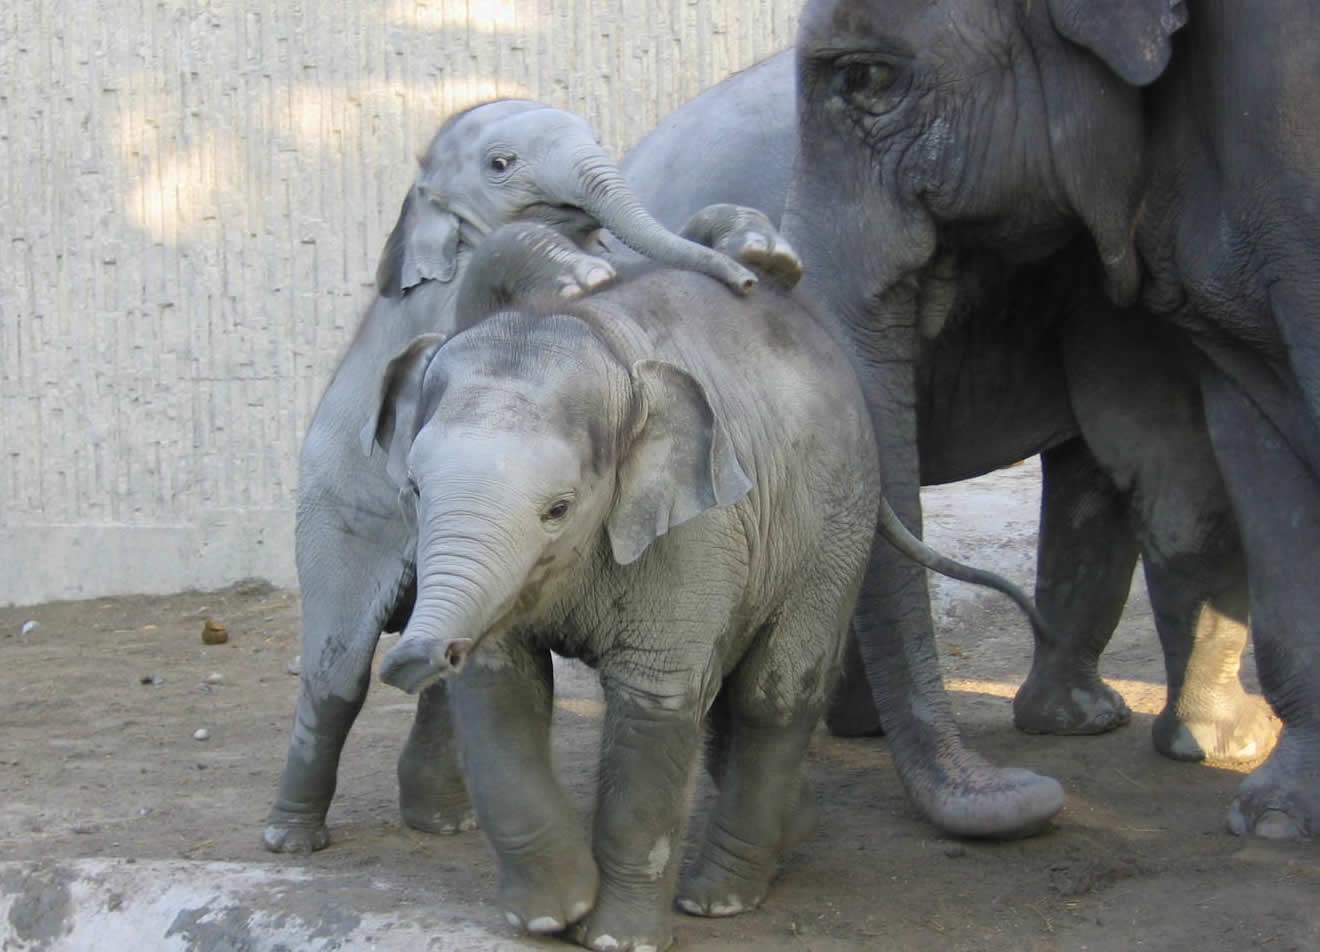 Playing elephant children